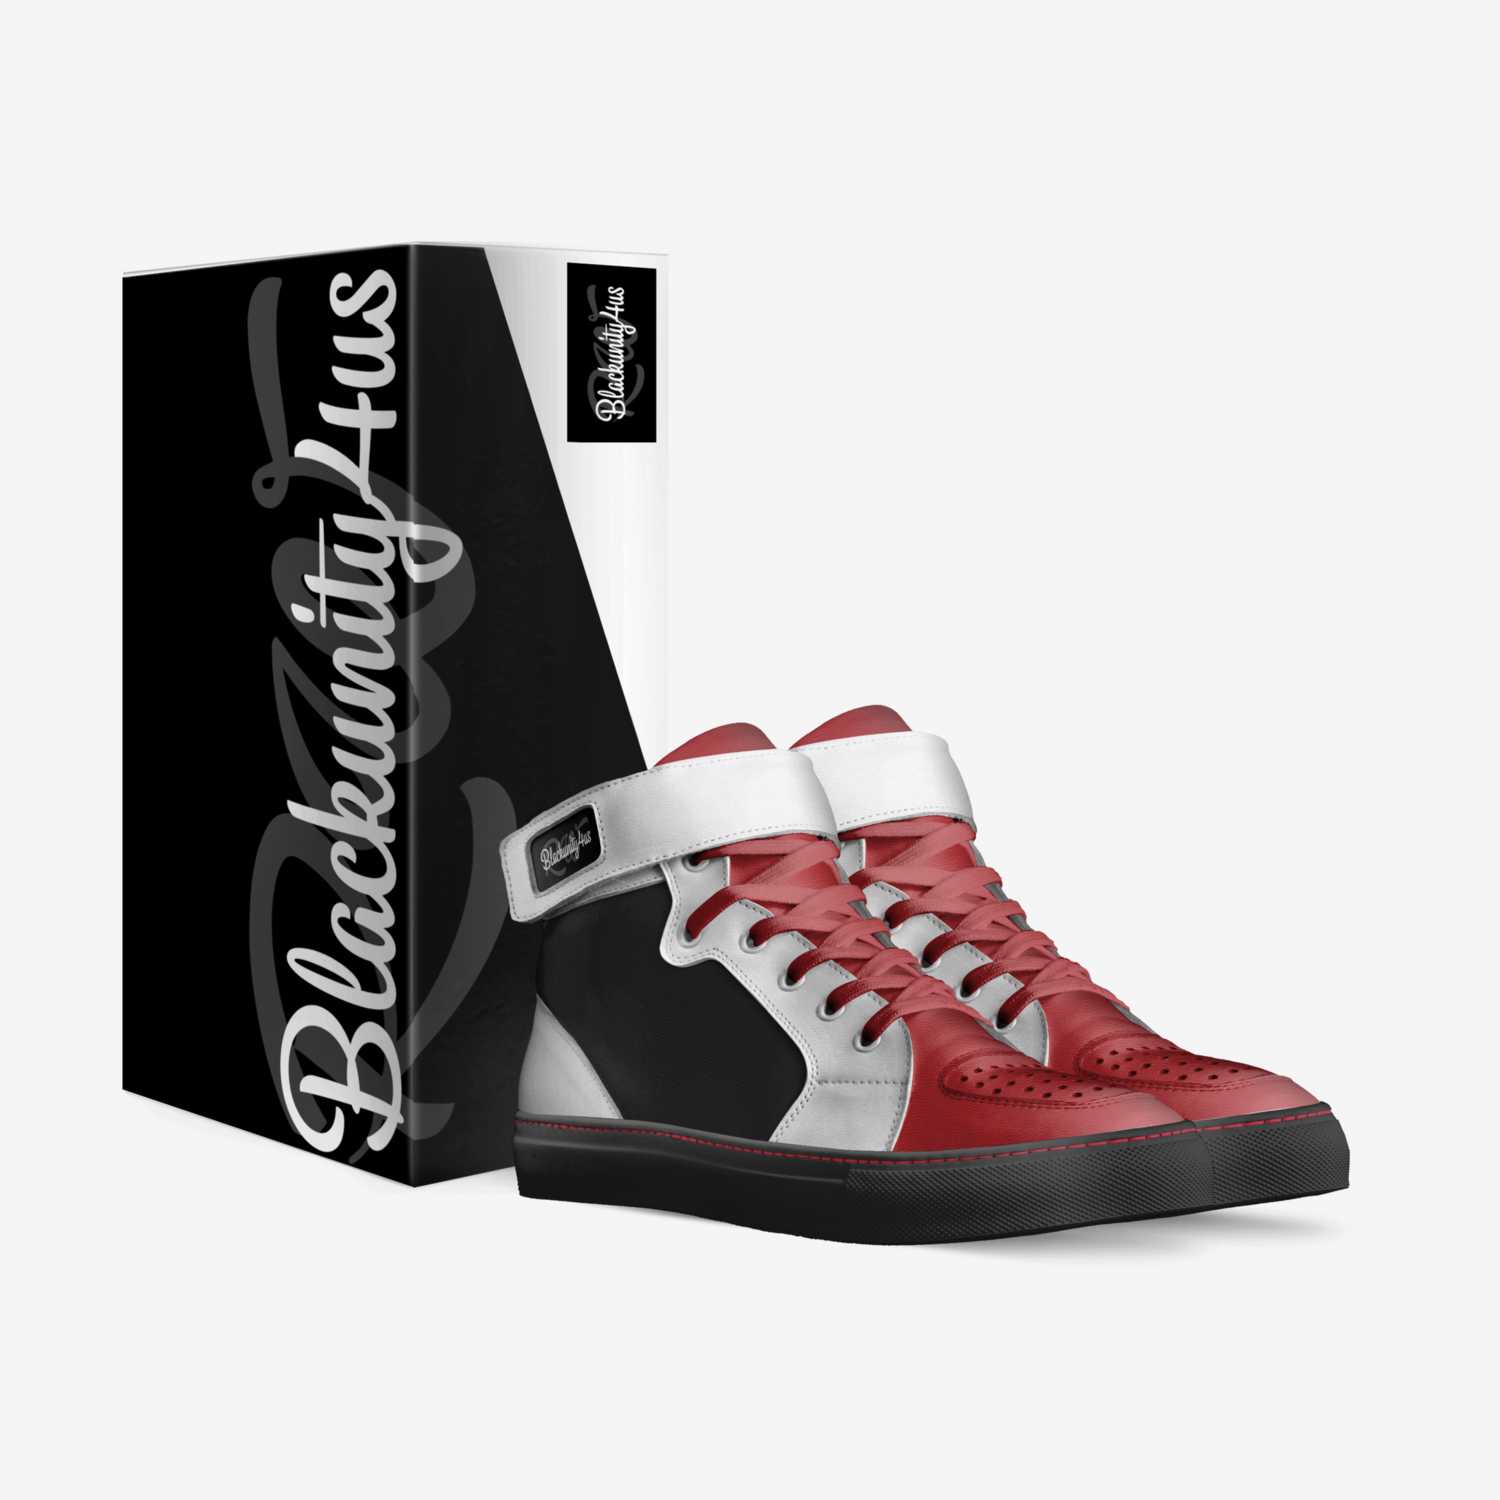 Blackunity4us custom made in Italy shoes by Raymond Wailes | Box view